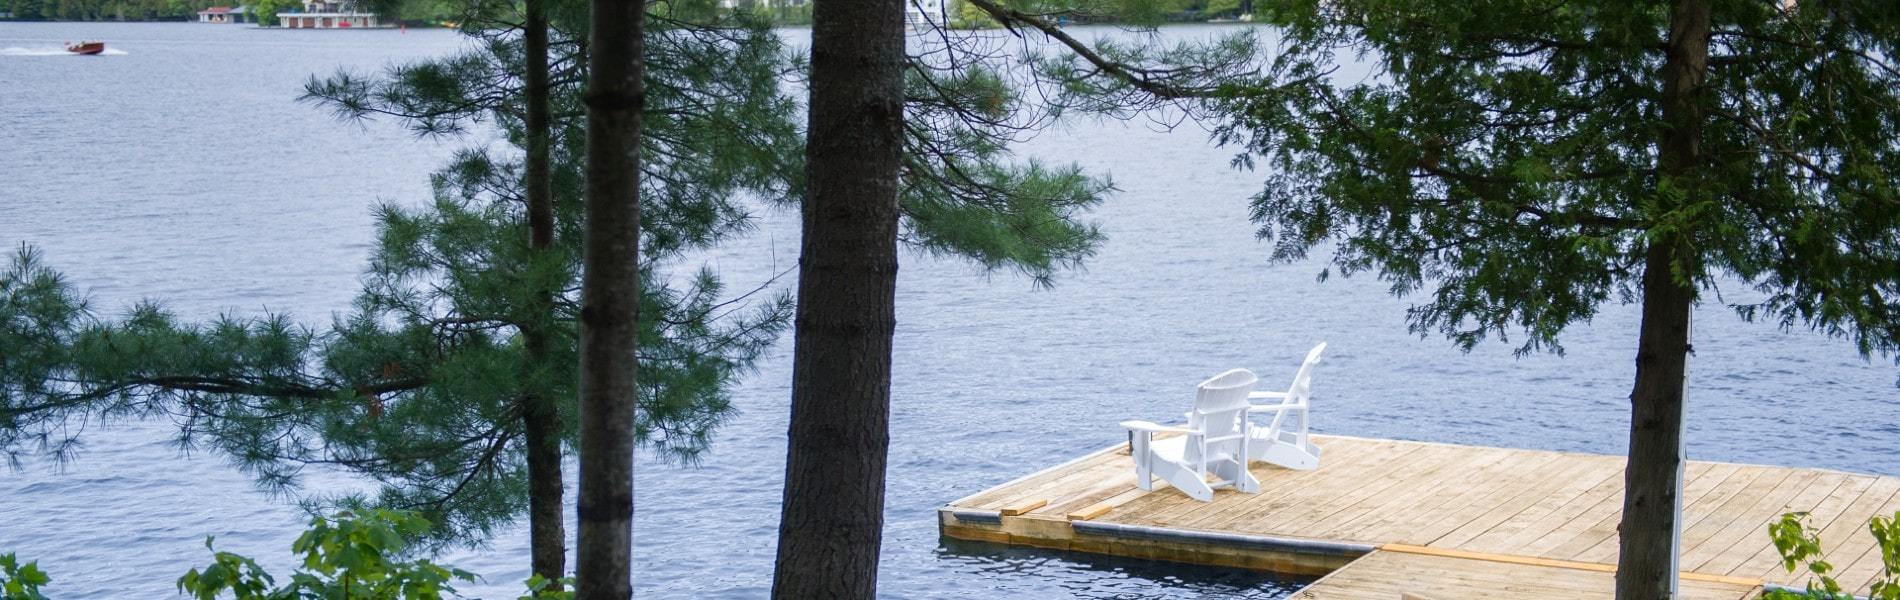 chair on a dock muskoka lake